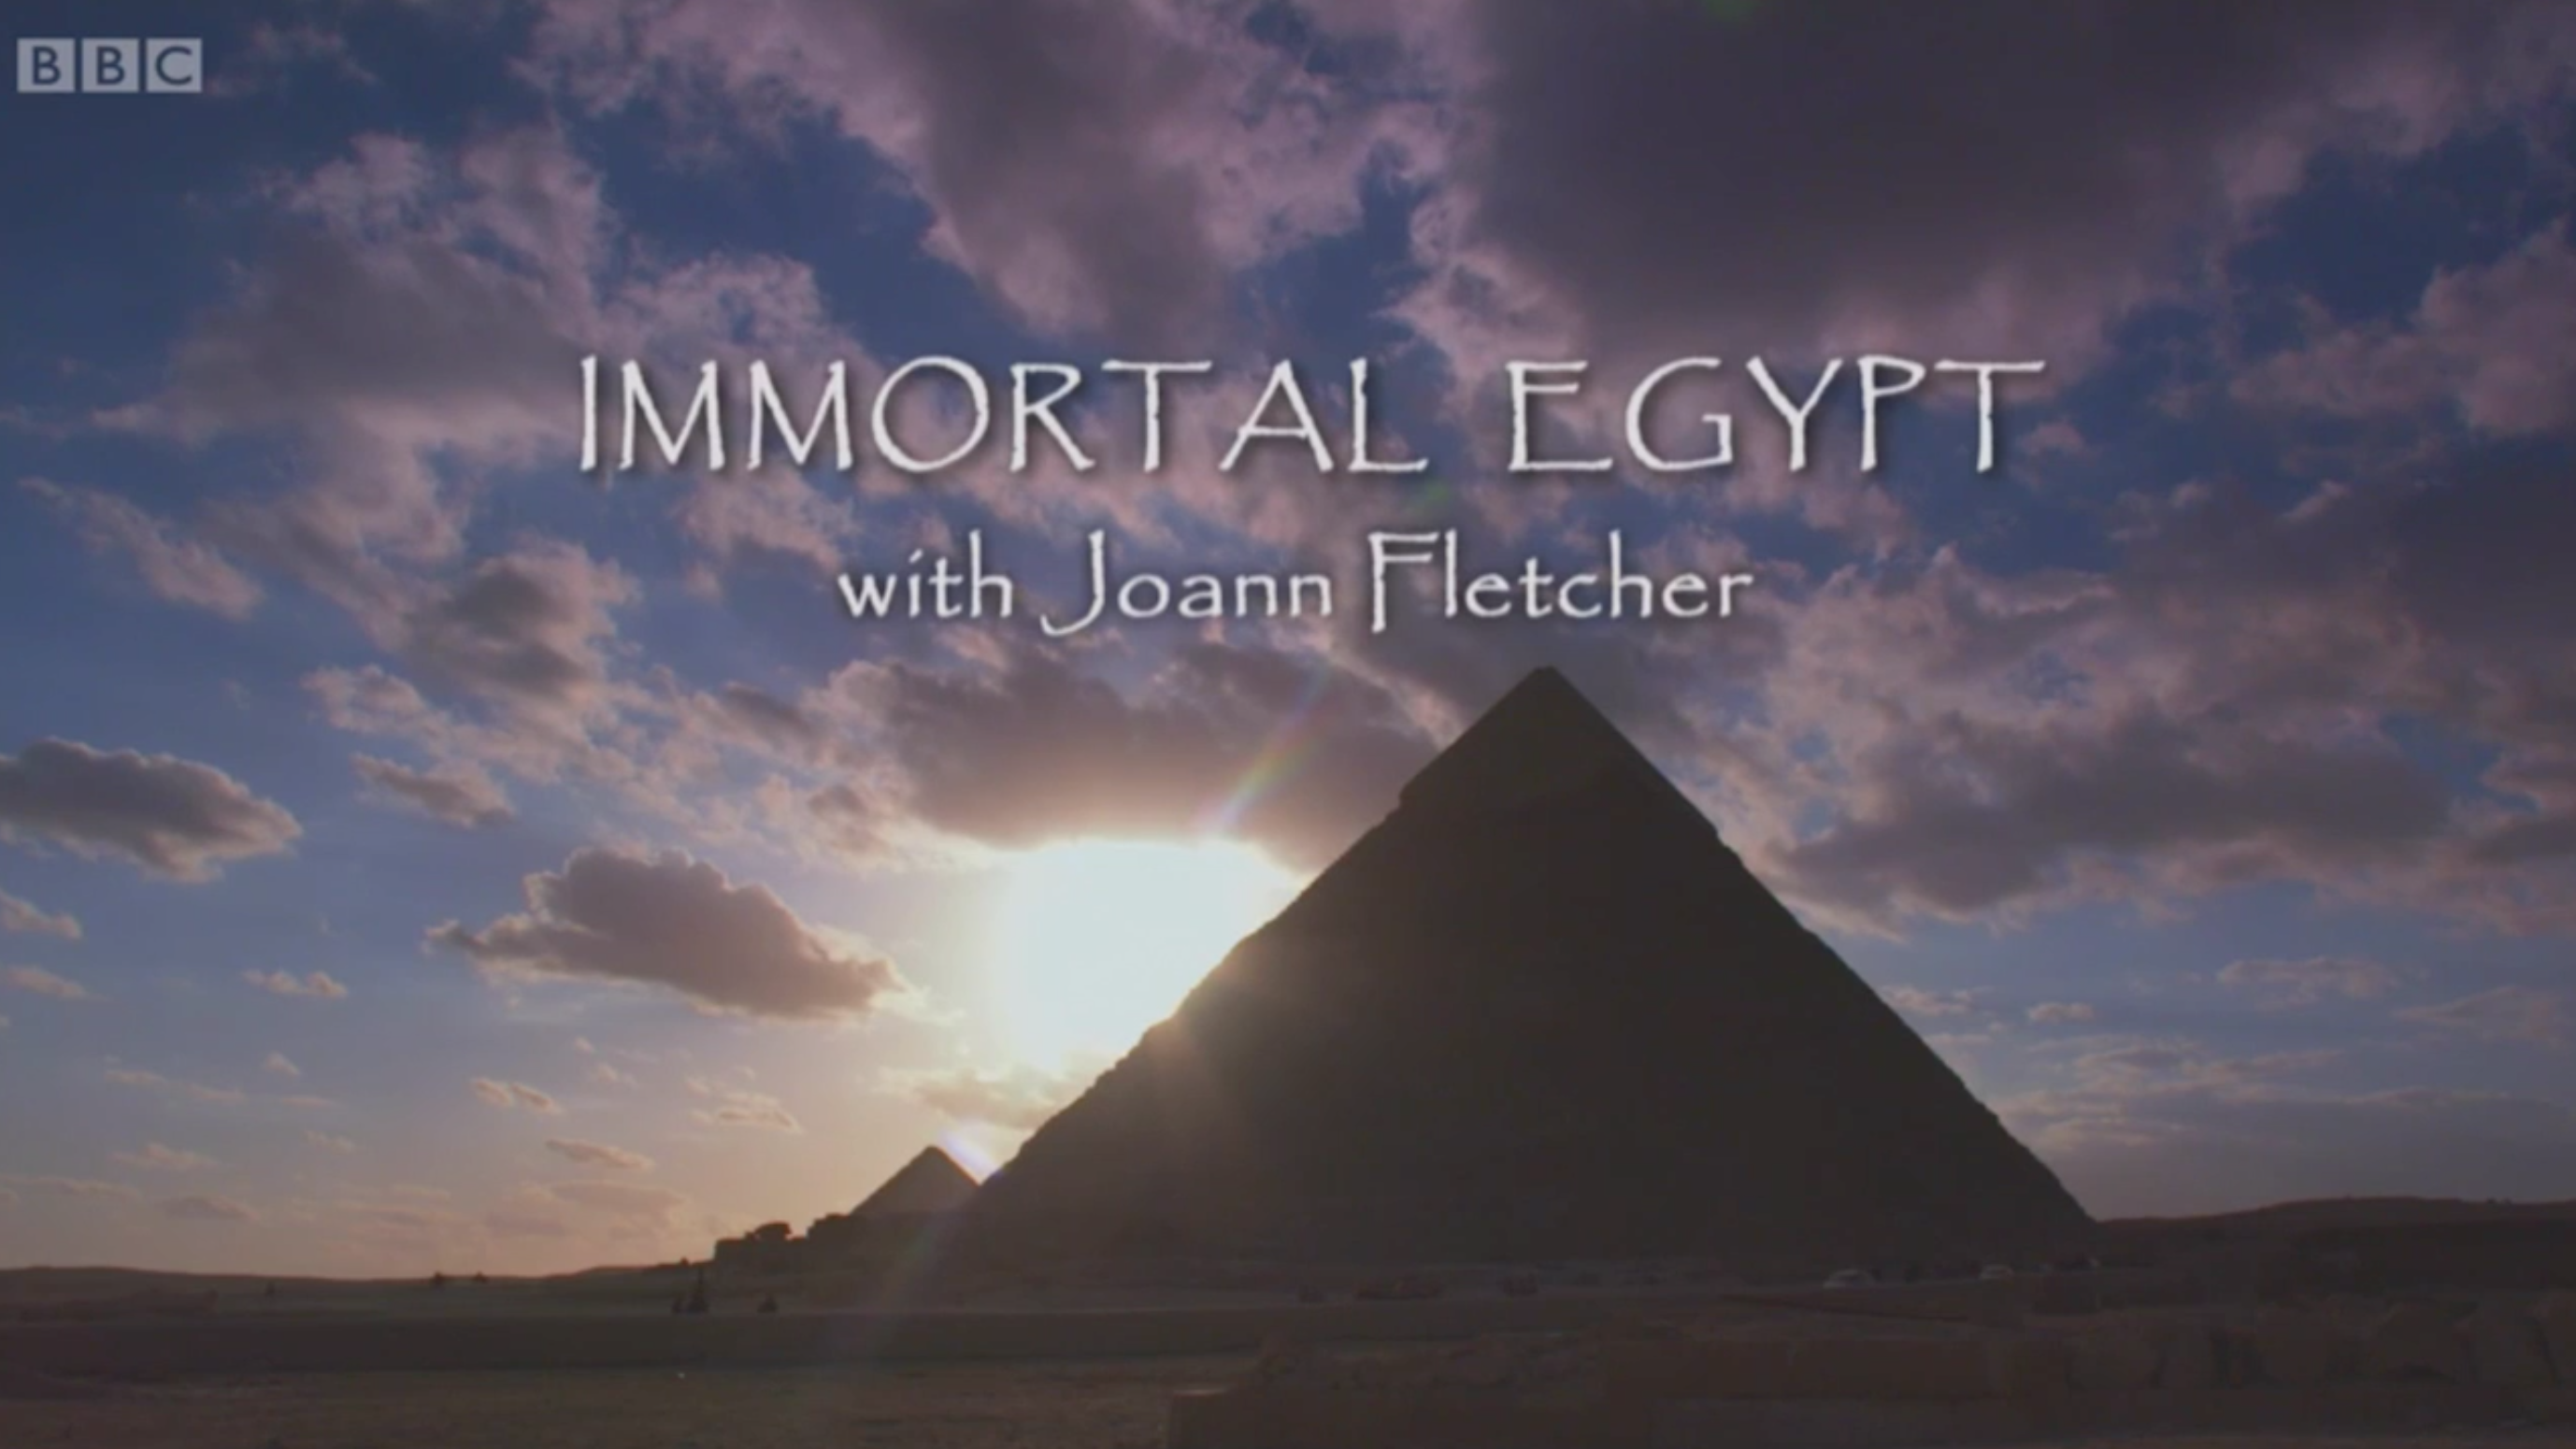 IMMORTAL EGYPT